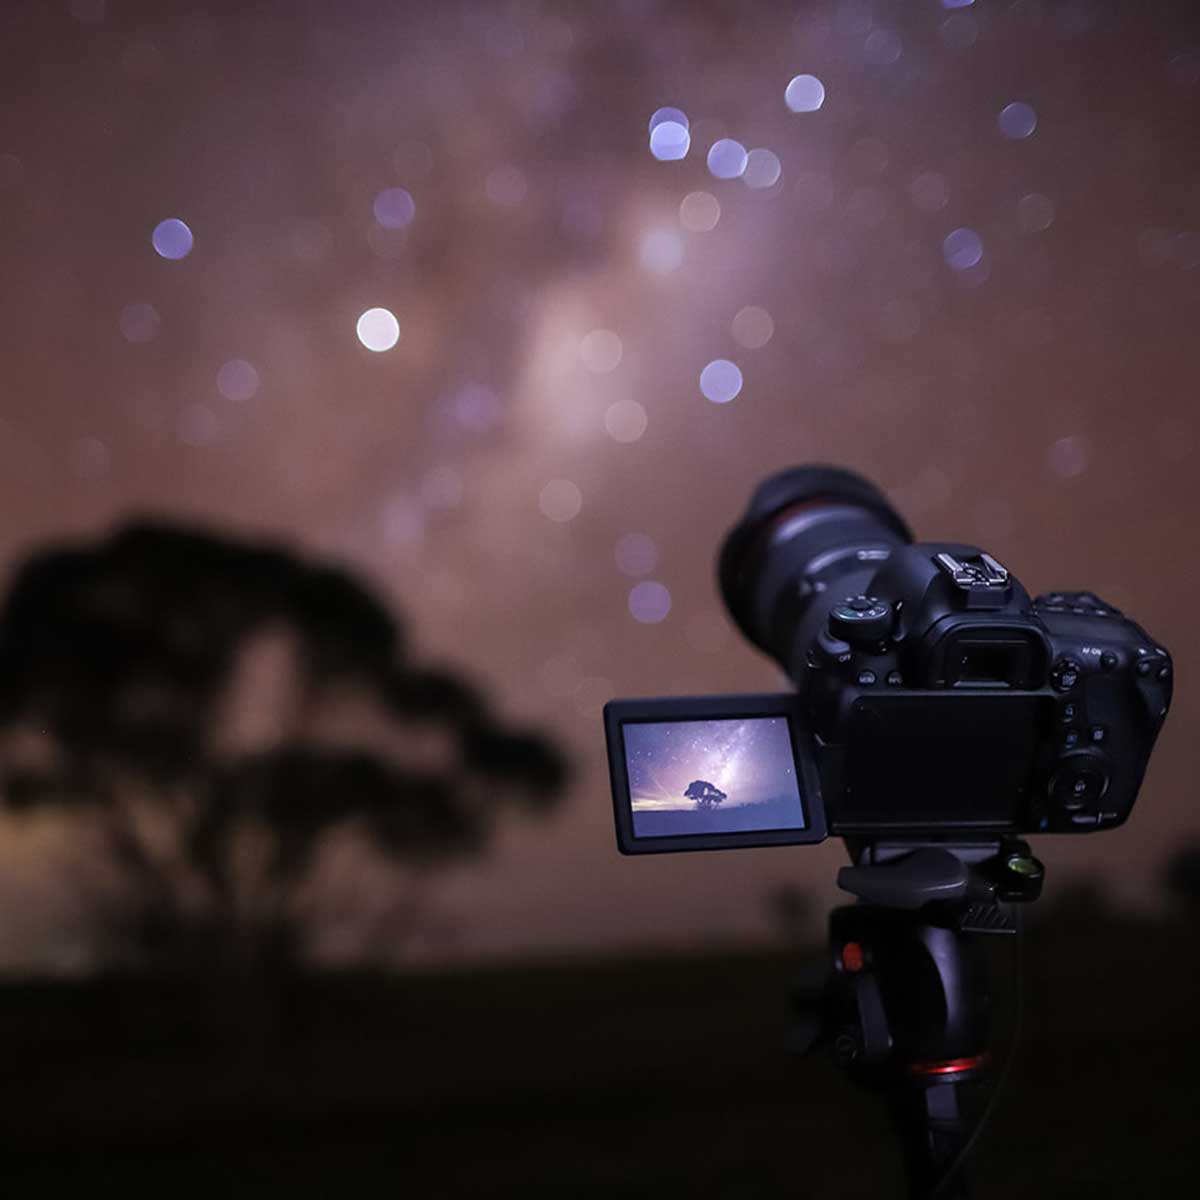 Astrophotography using a Canon DSLR camera